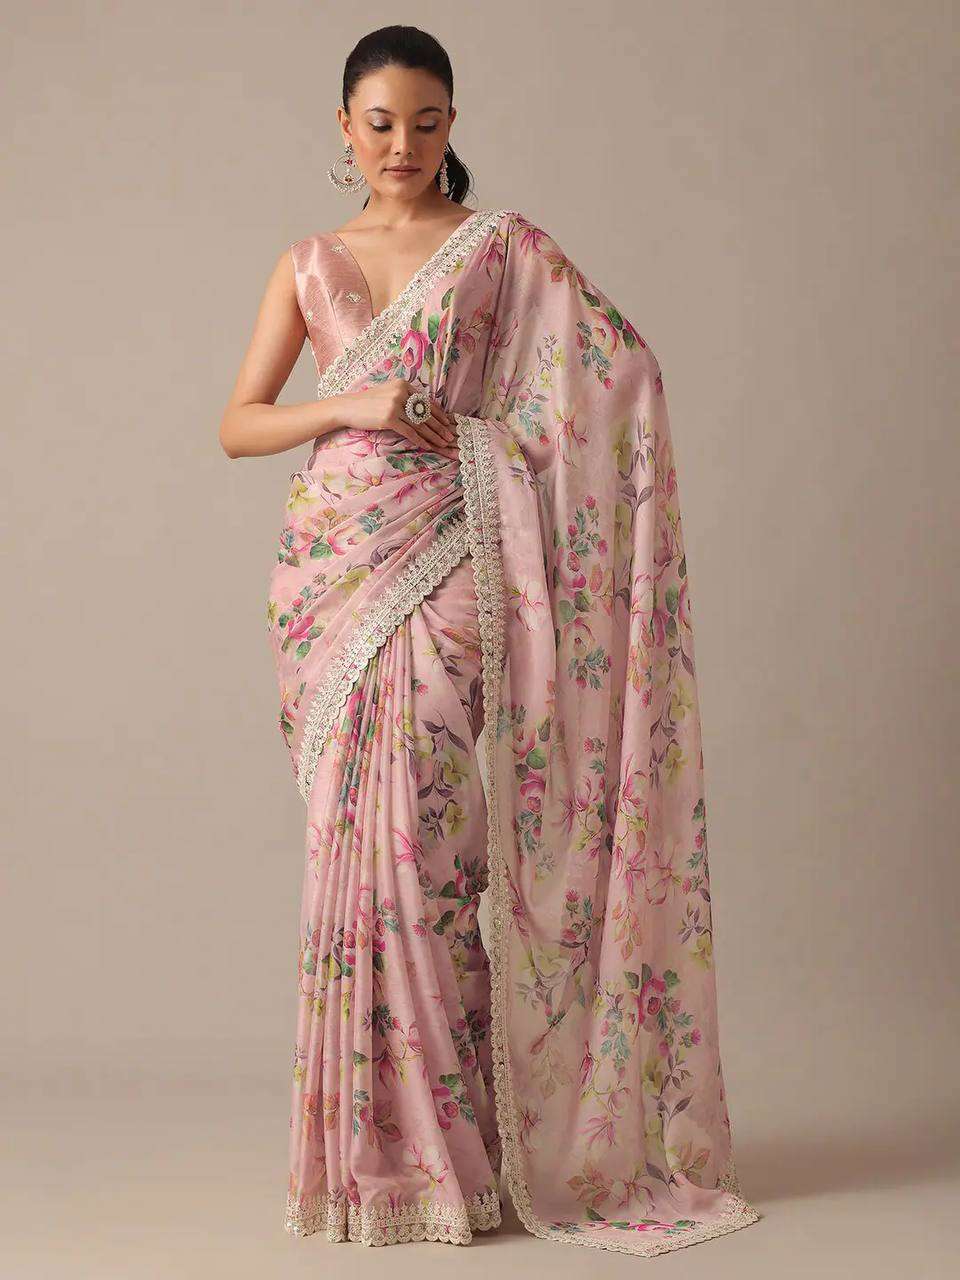 saree design number bt 1210 saree detail saree fabric georgette saree work digital prints n embroidery codding n sequins work saree patten fancy cutwork border